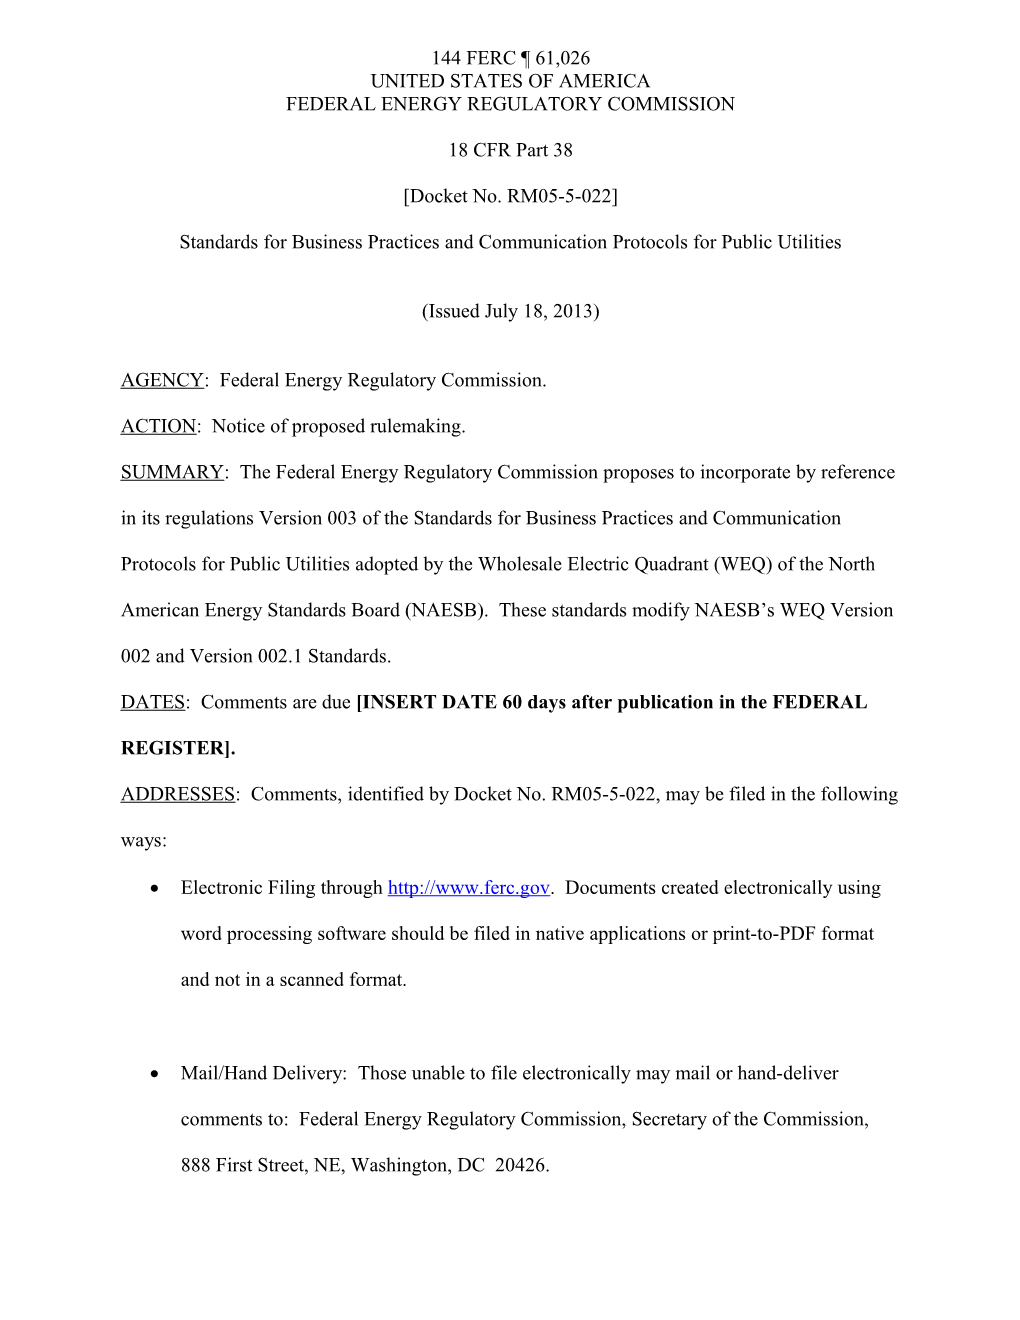 Federal Energy Regulatory Commission s9